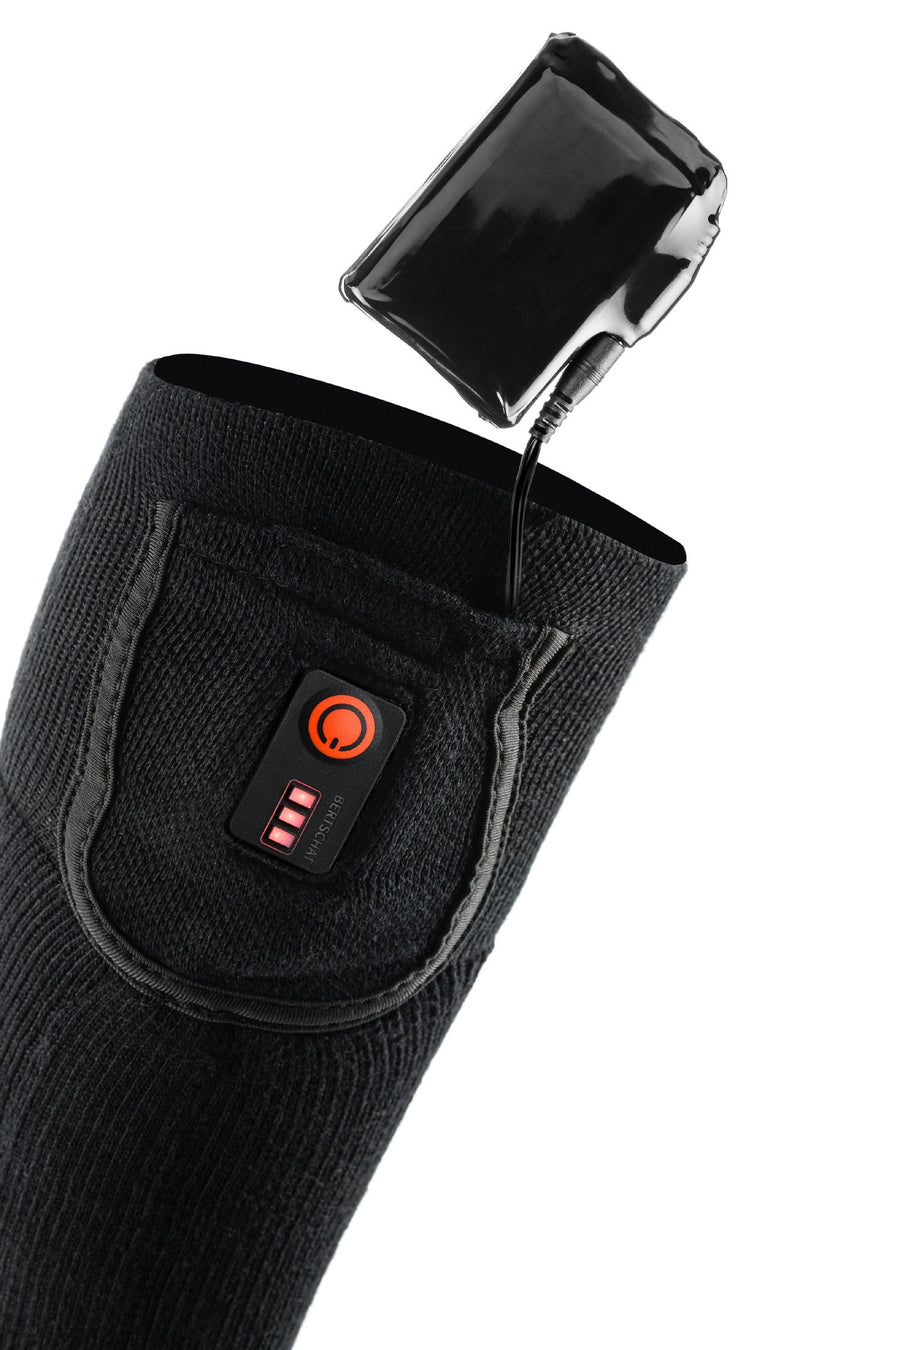 Heated Socks PRO - Hiking Edition | USB